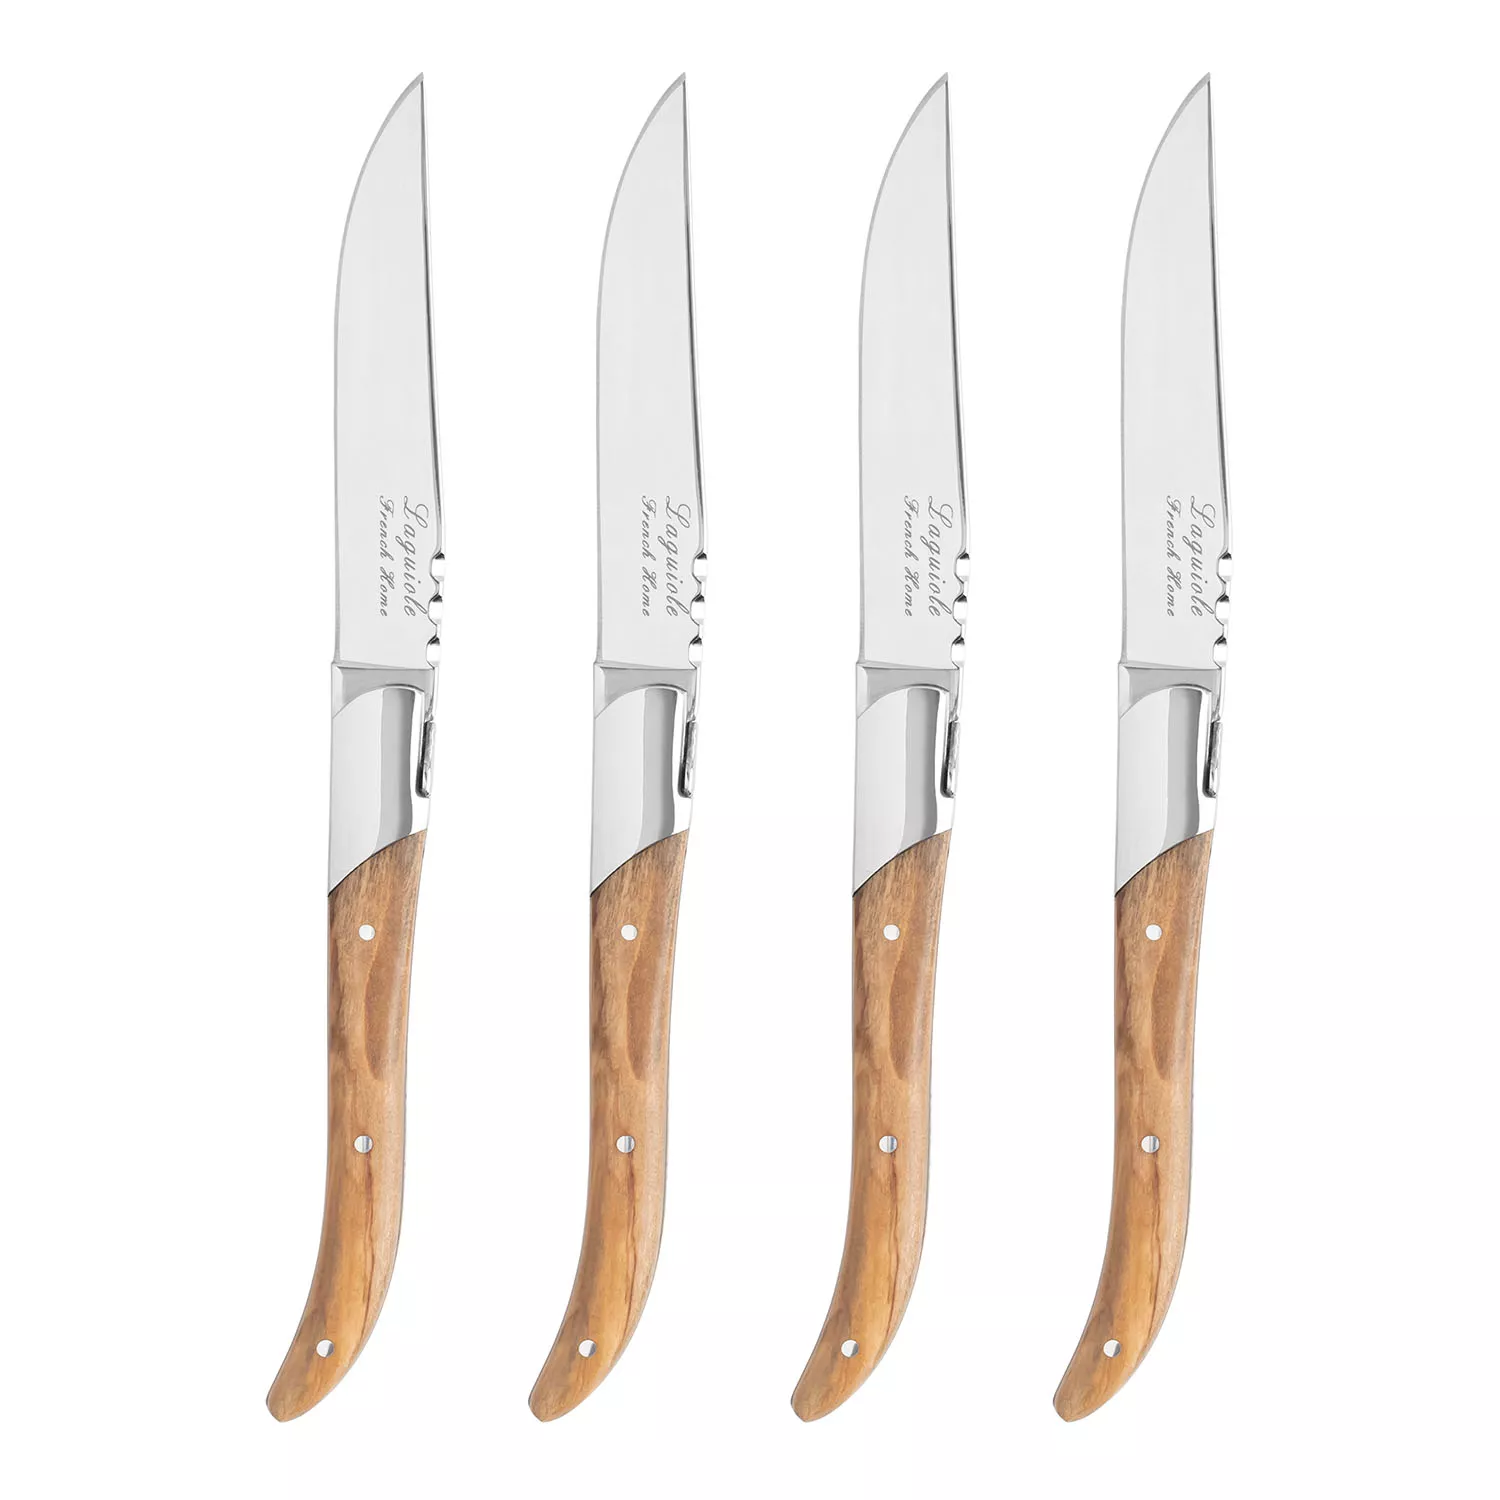 9 Laguiole 6-Piece Wooden Handle Steak Knife Gift Set